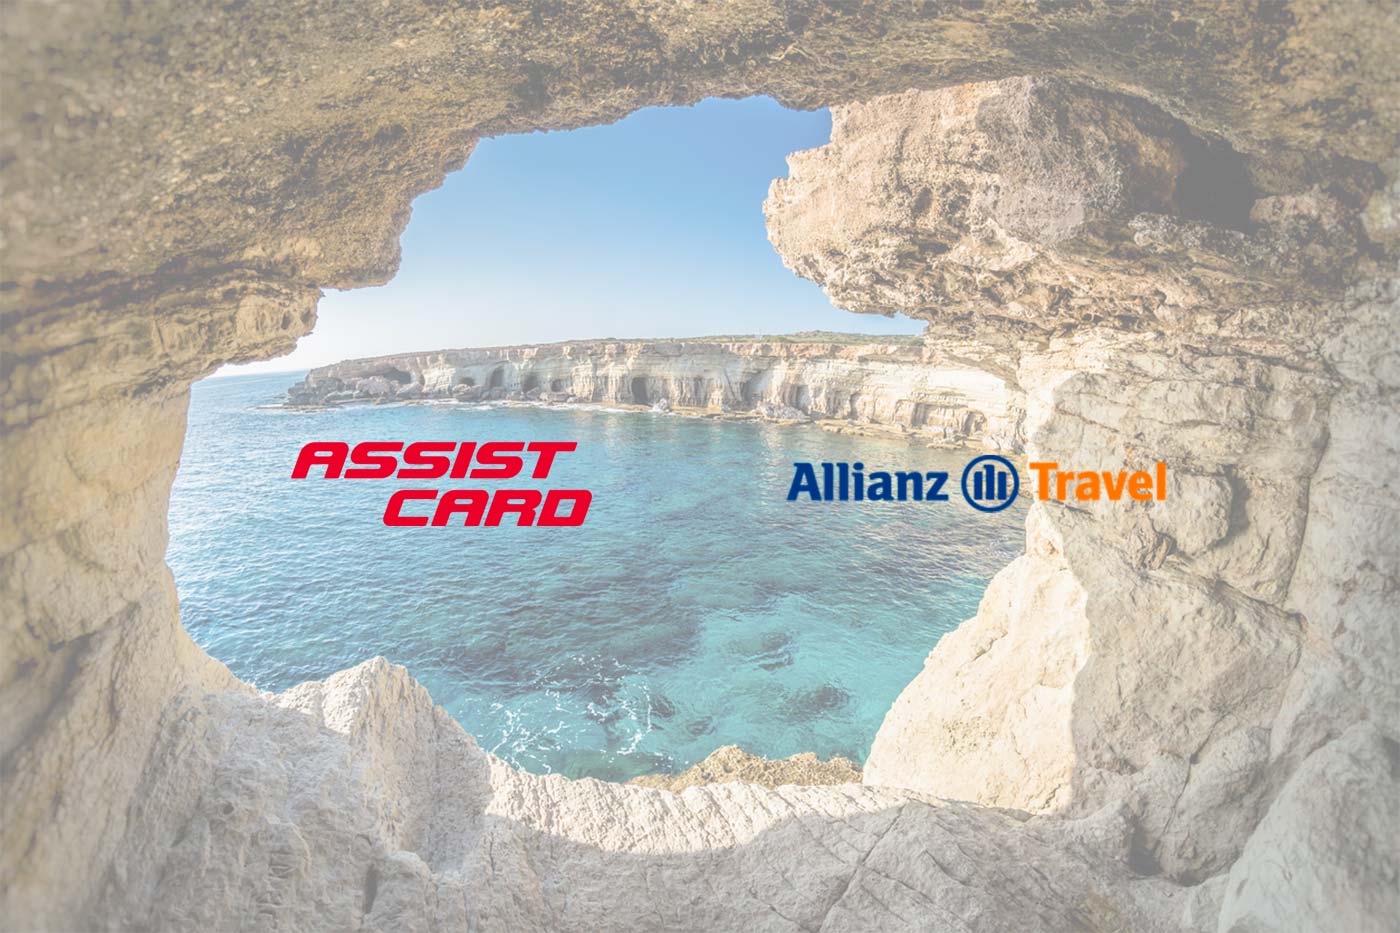 Assist Card ou Allianz Travel